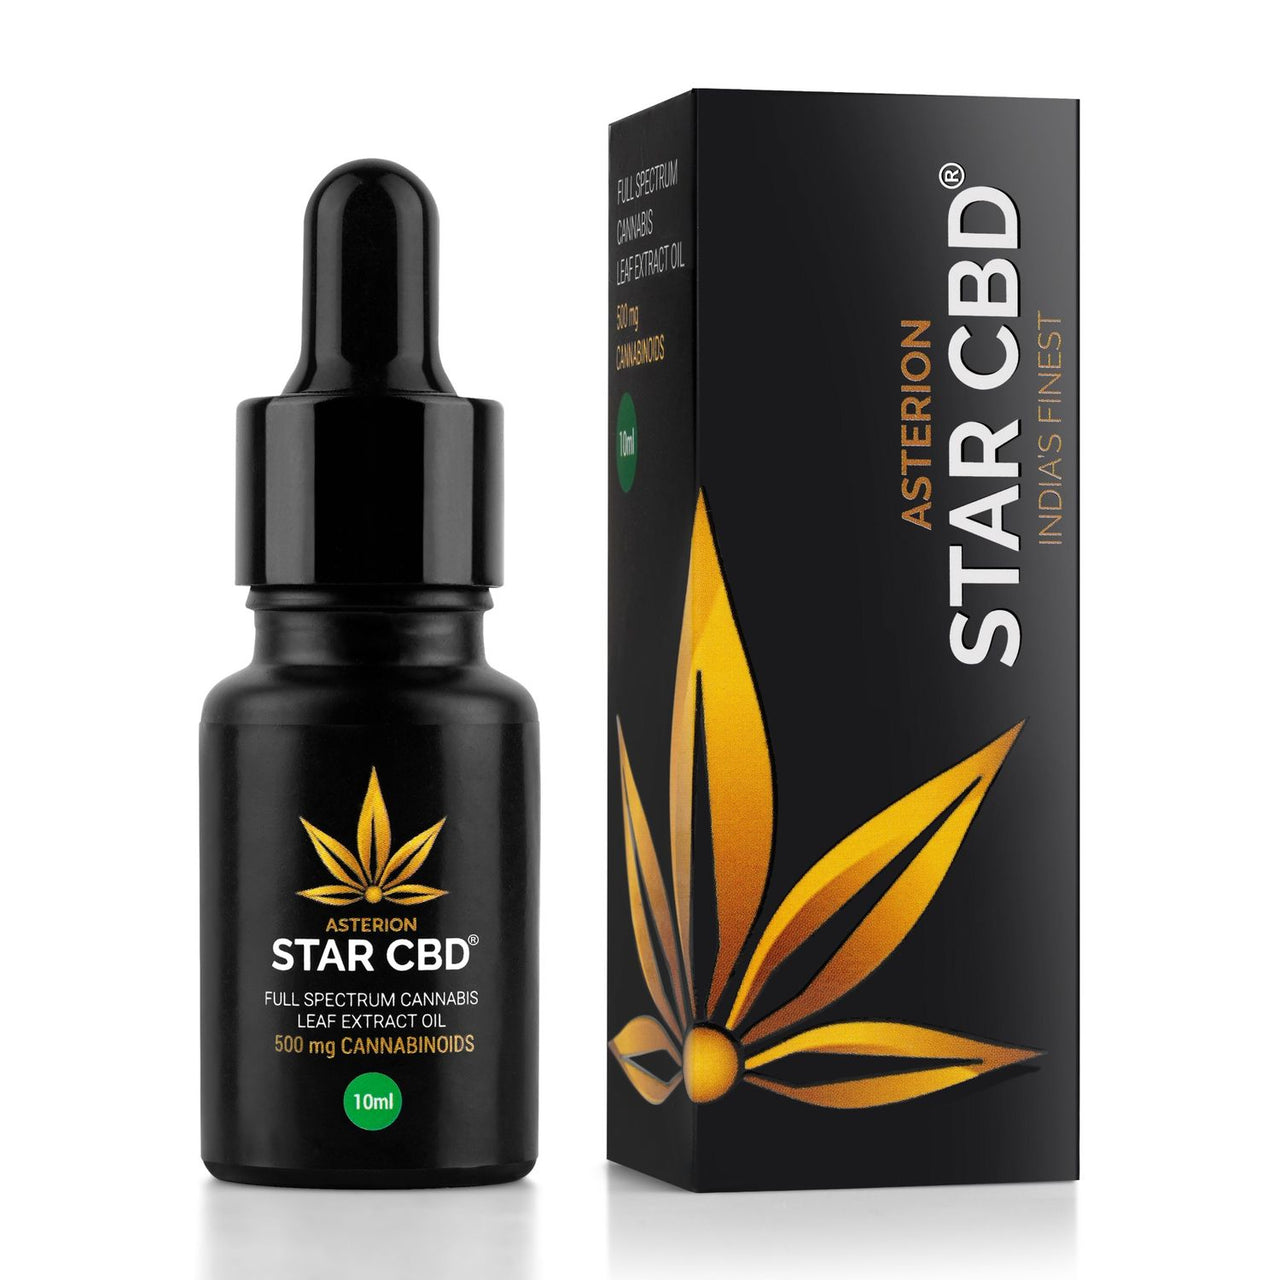 Star CBD- Full Spectrum Cannabis Leaf Extract Oil - 500mg